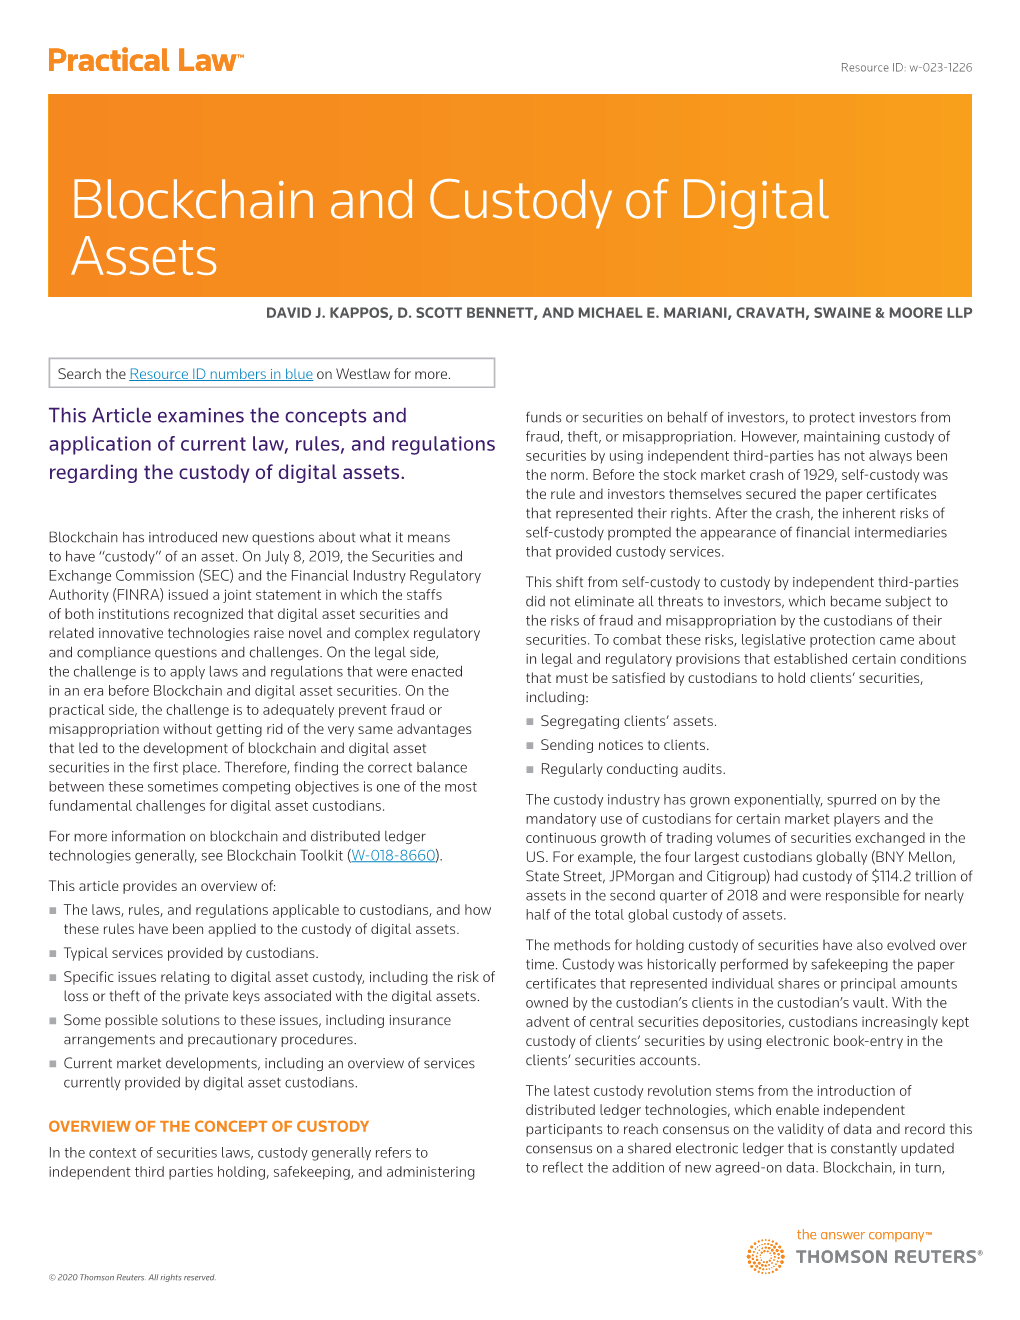 Blockchain and Custody of Digital Assets